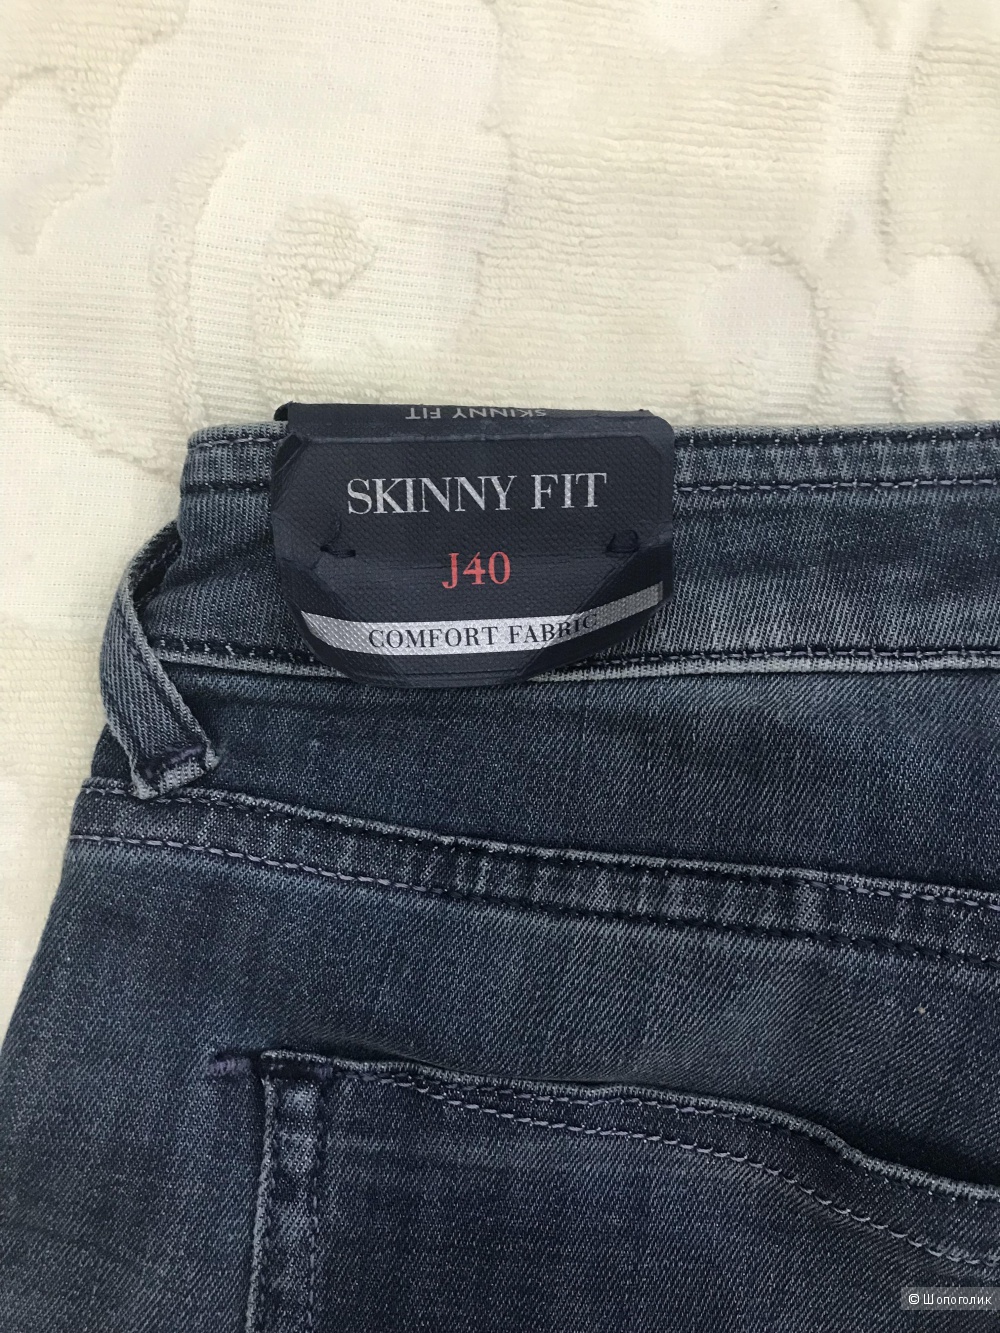 Джинсы Armani Jeans, модель Skinny fit,  28 размер